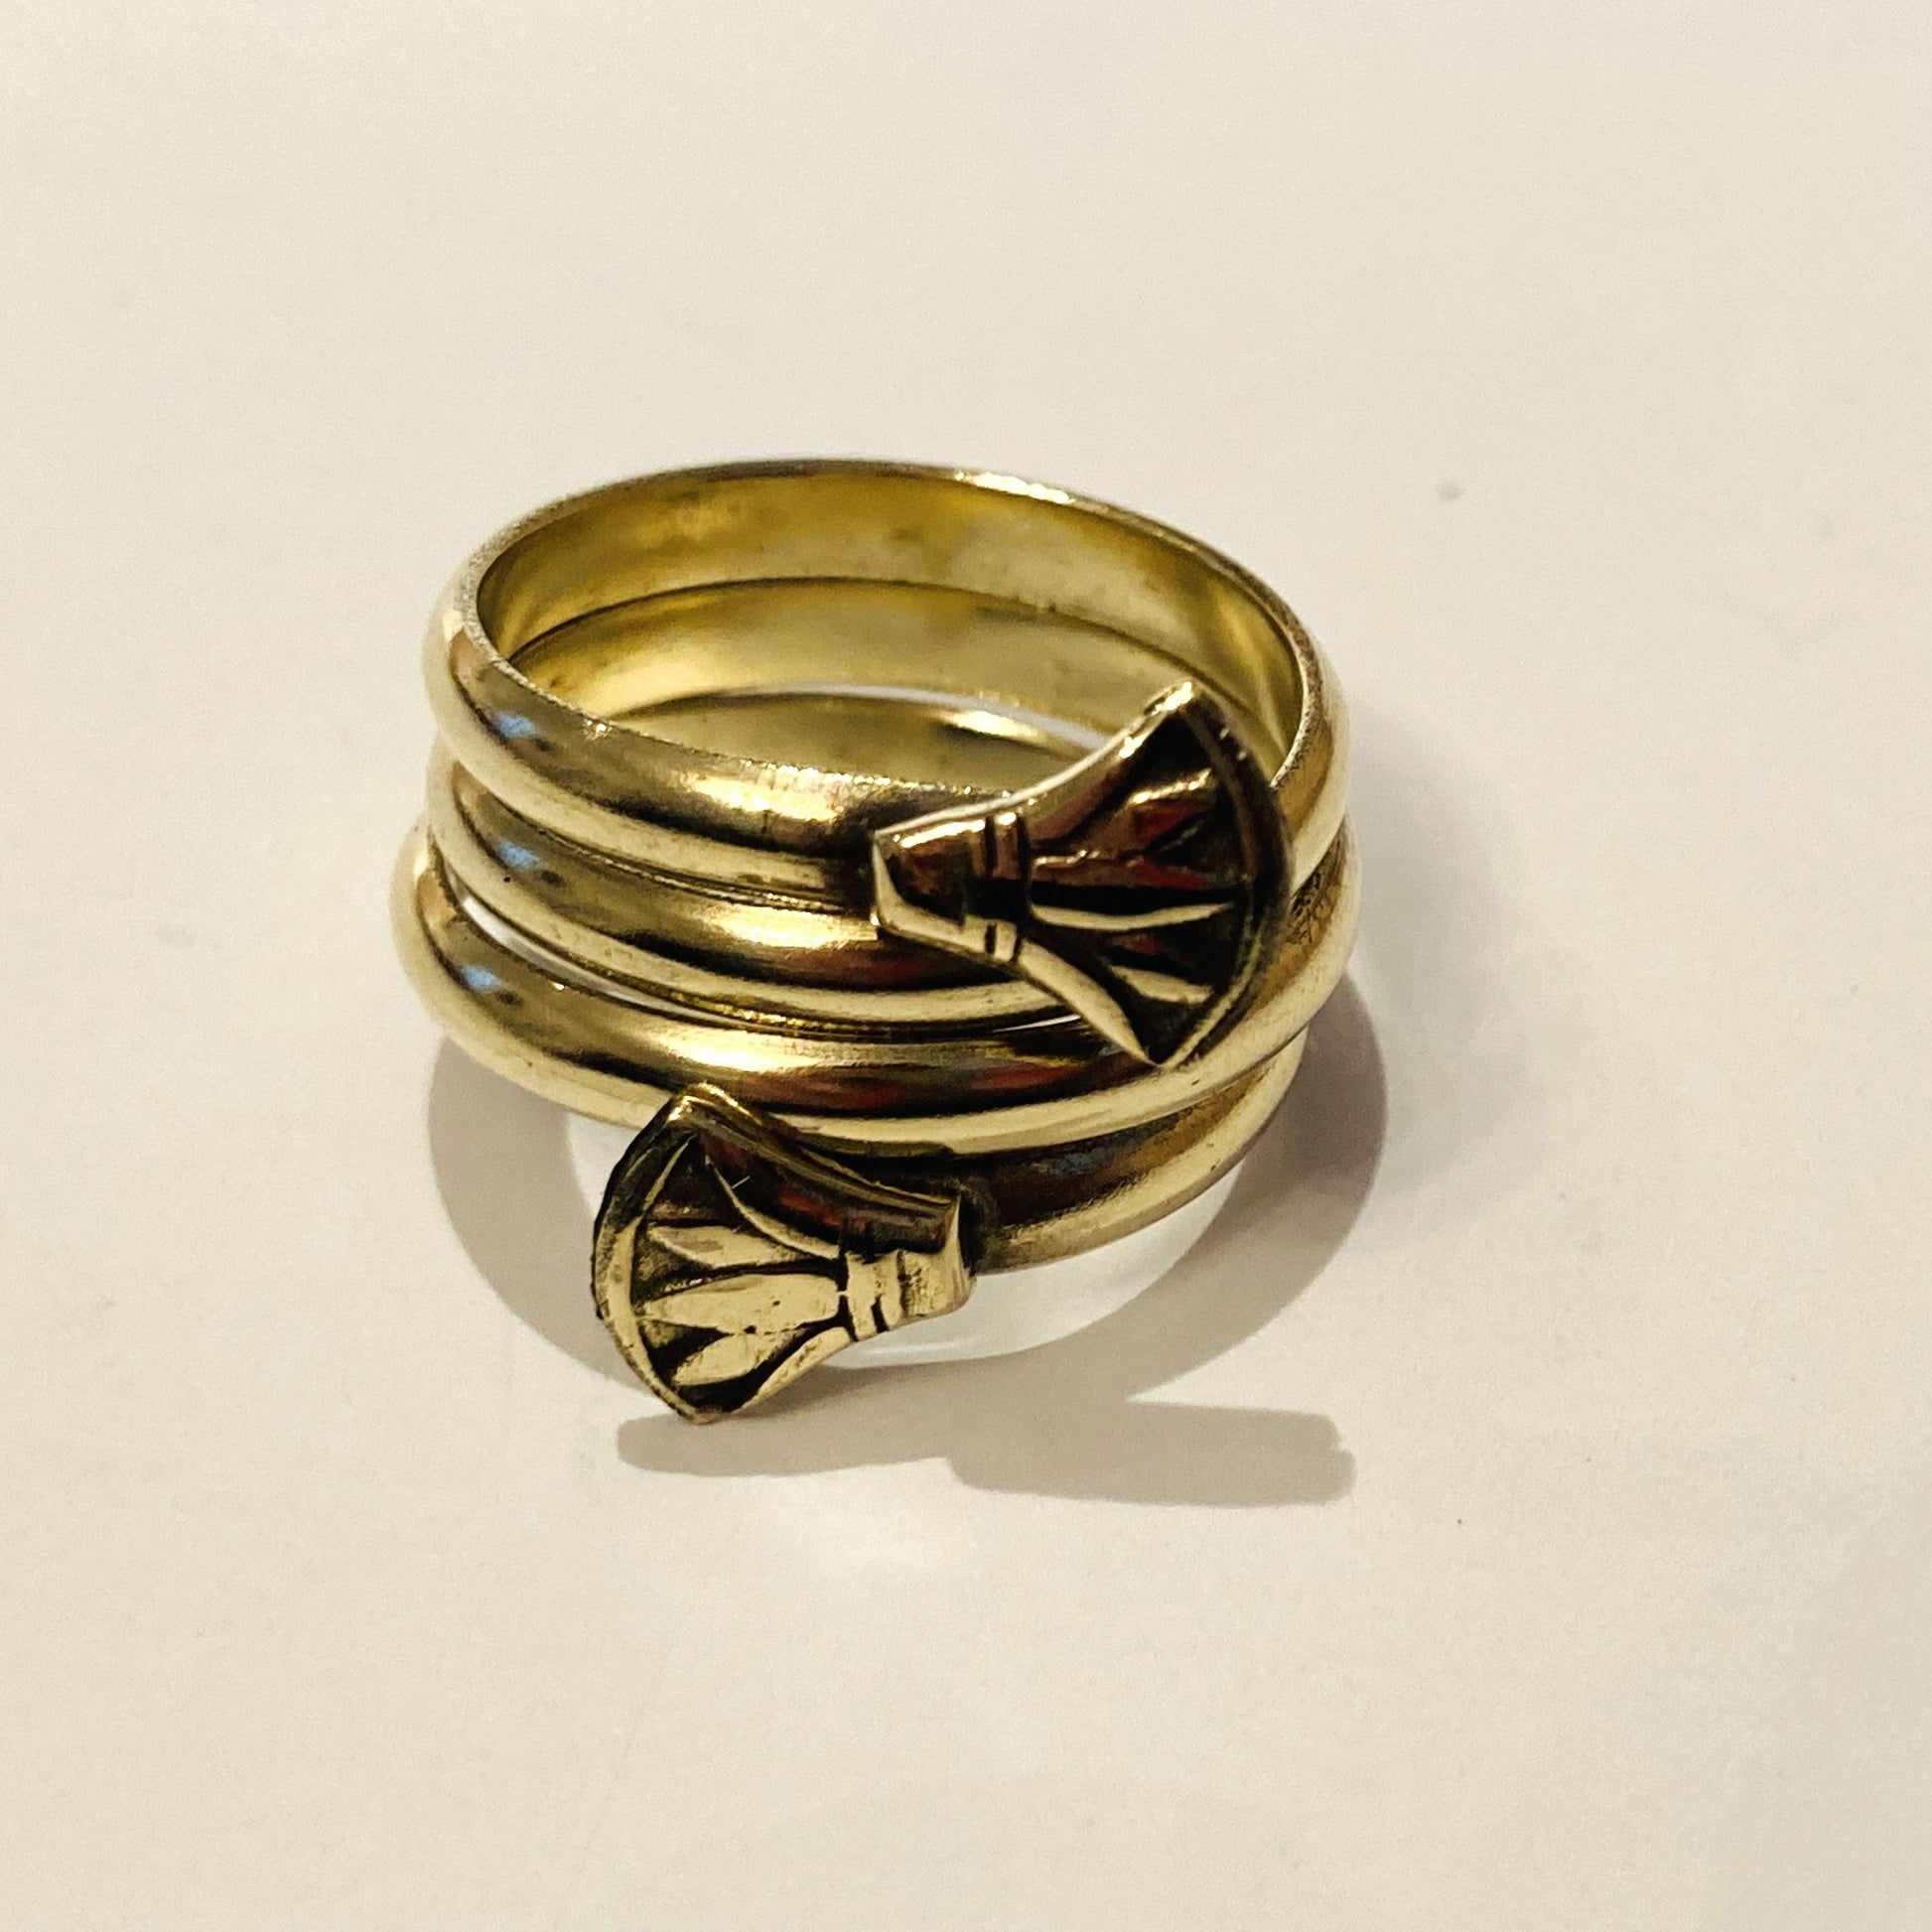 Handmade Brass Ring - Spiral with Lotus